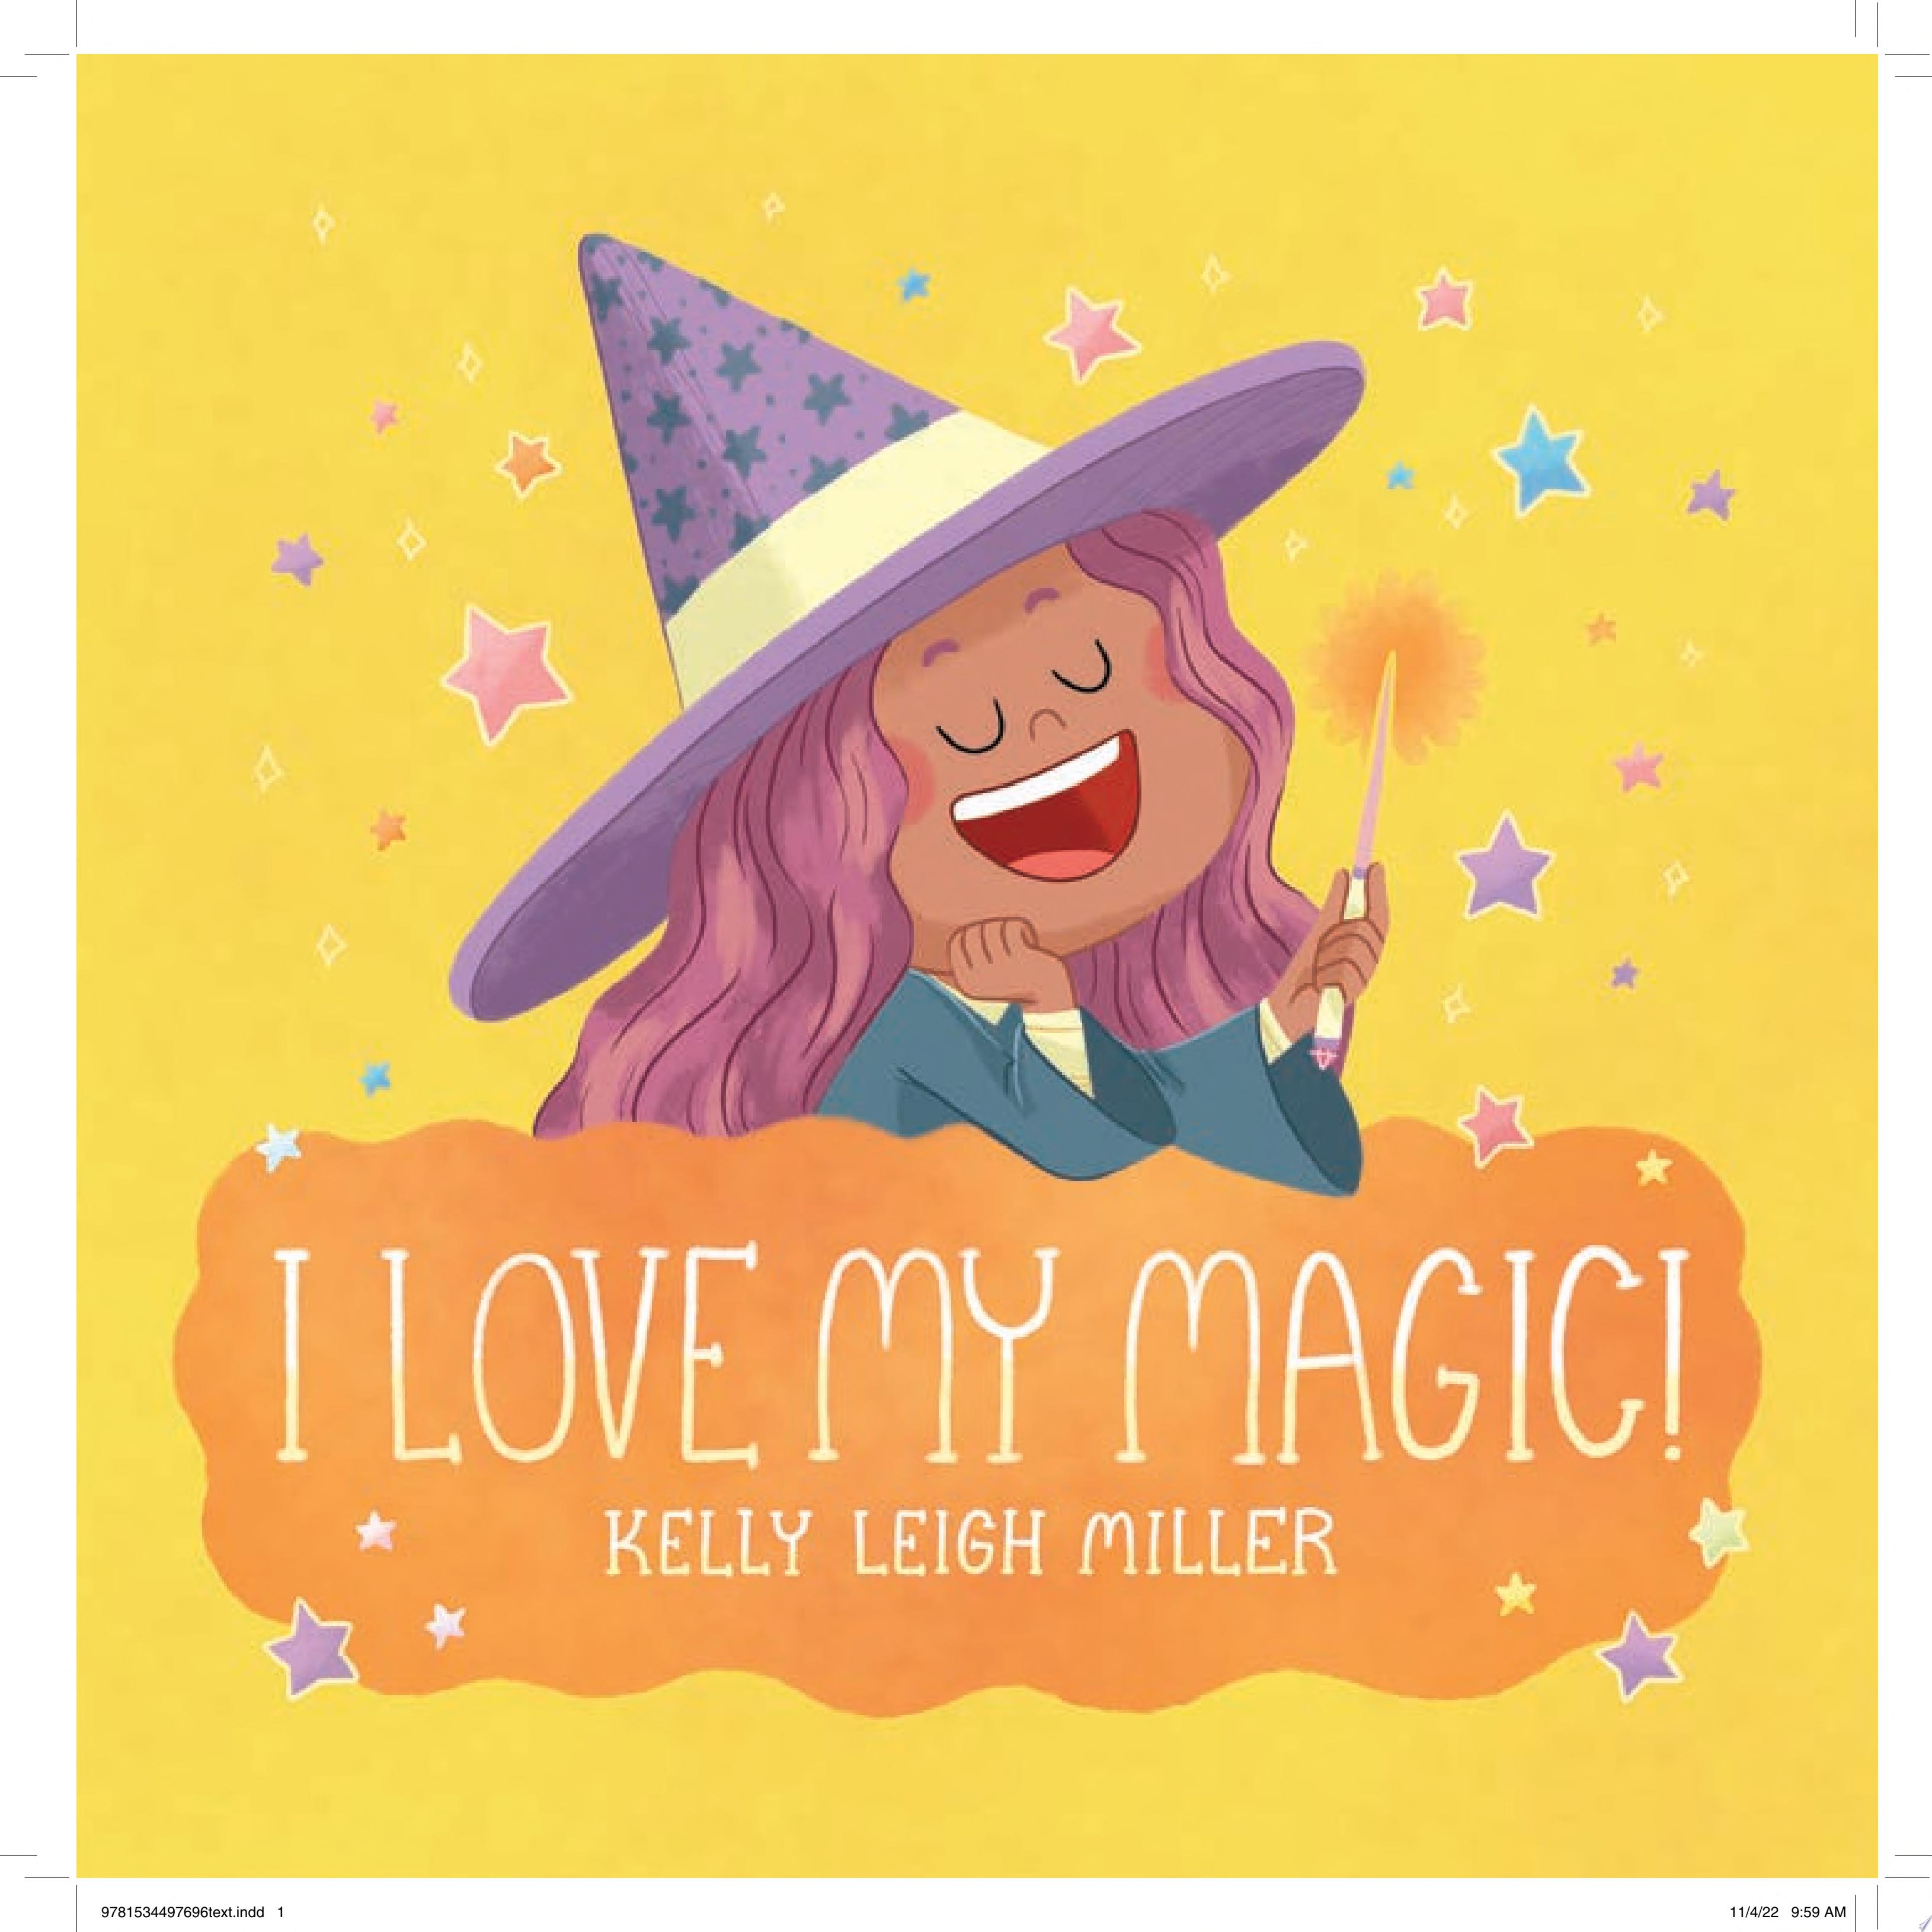 Image for "I Love My Magic!"